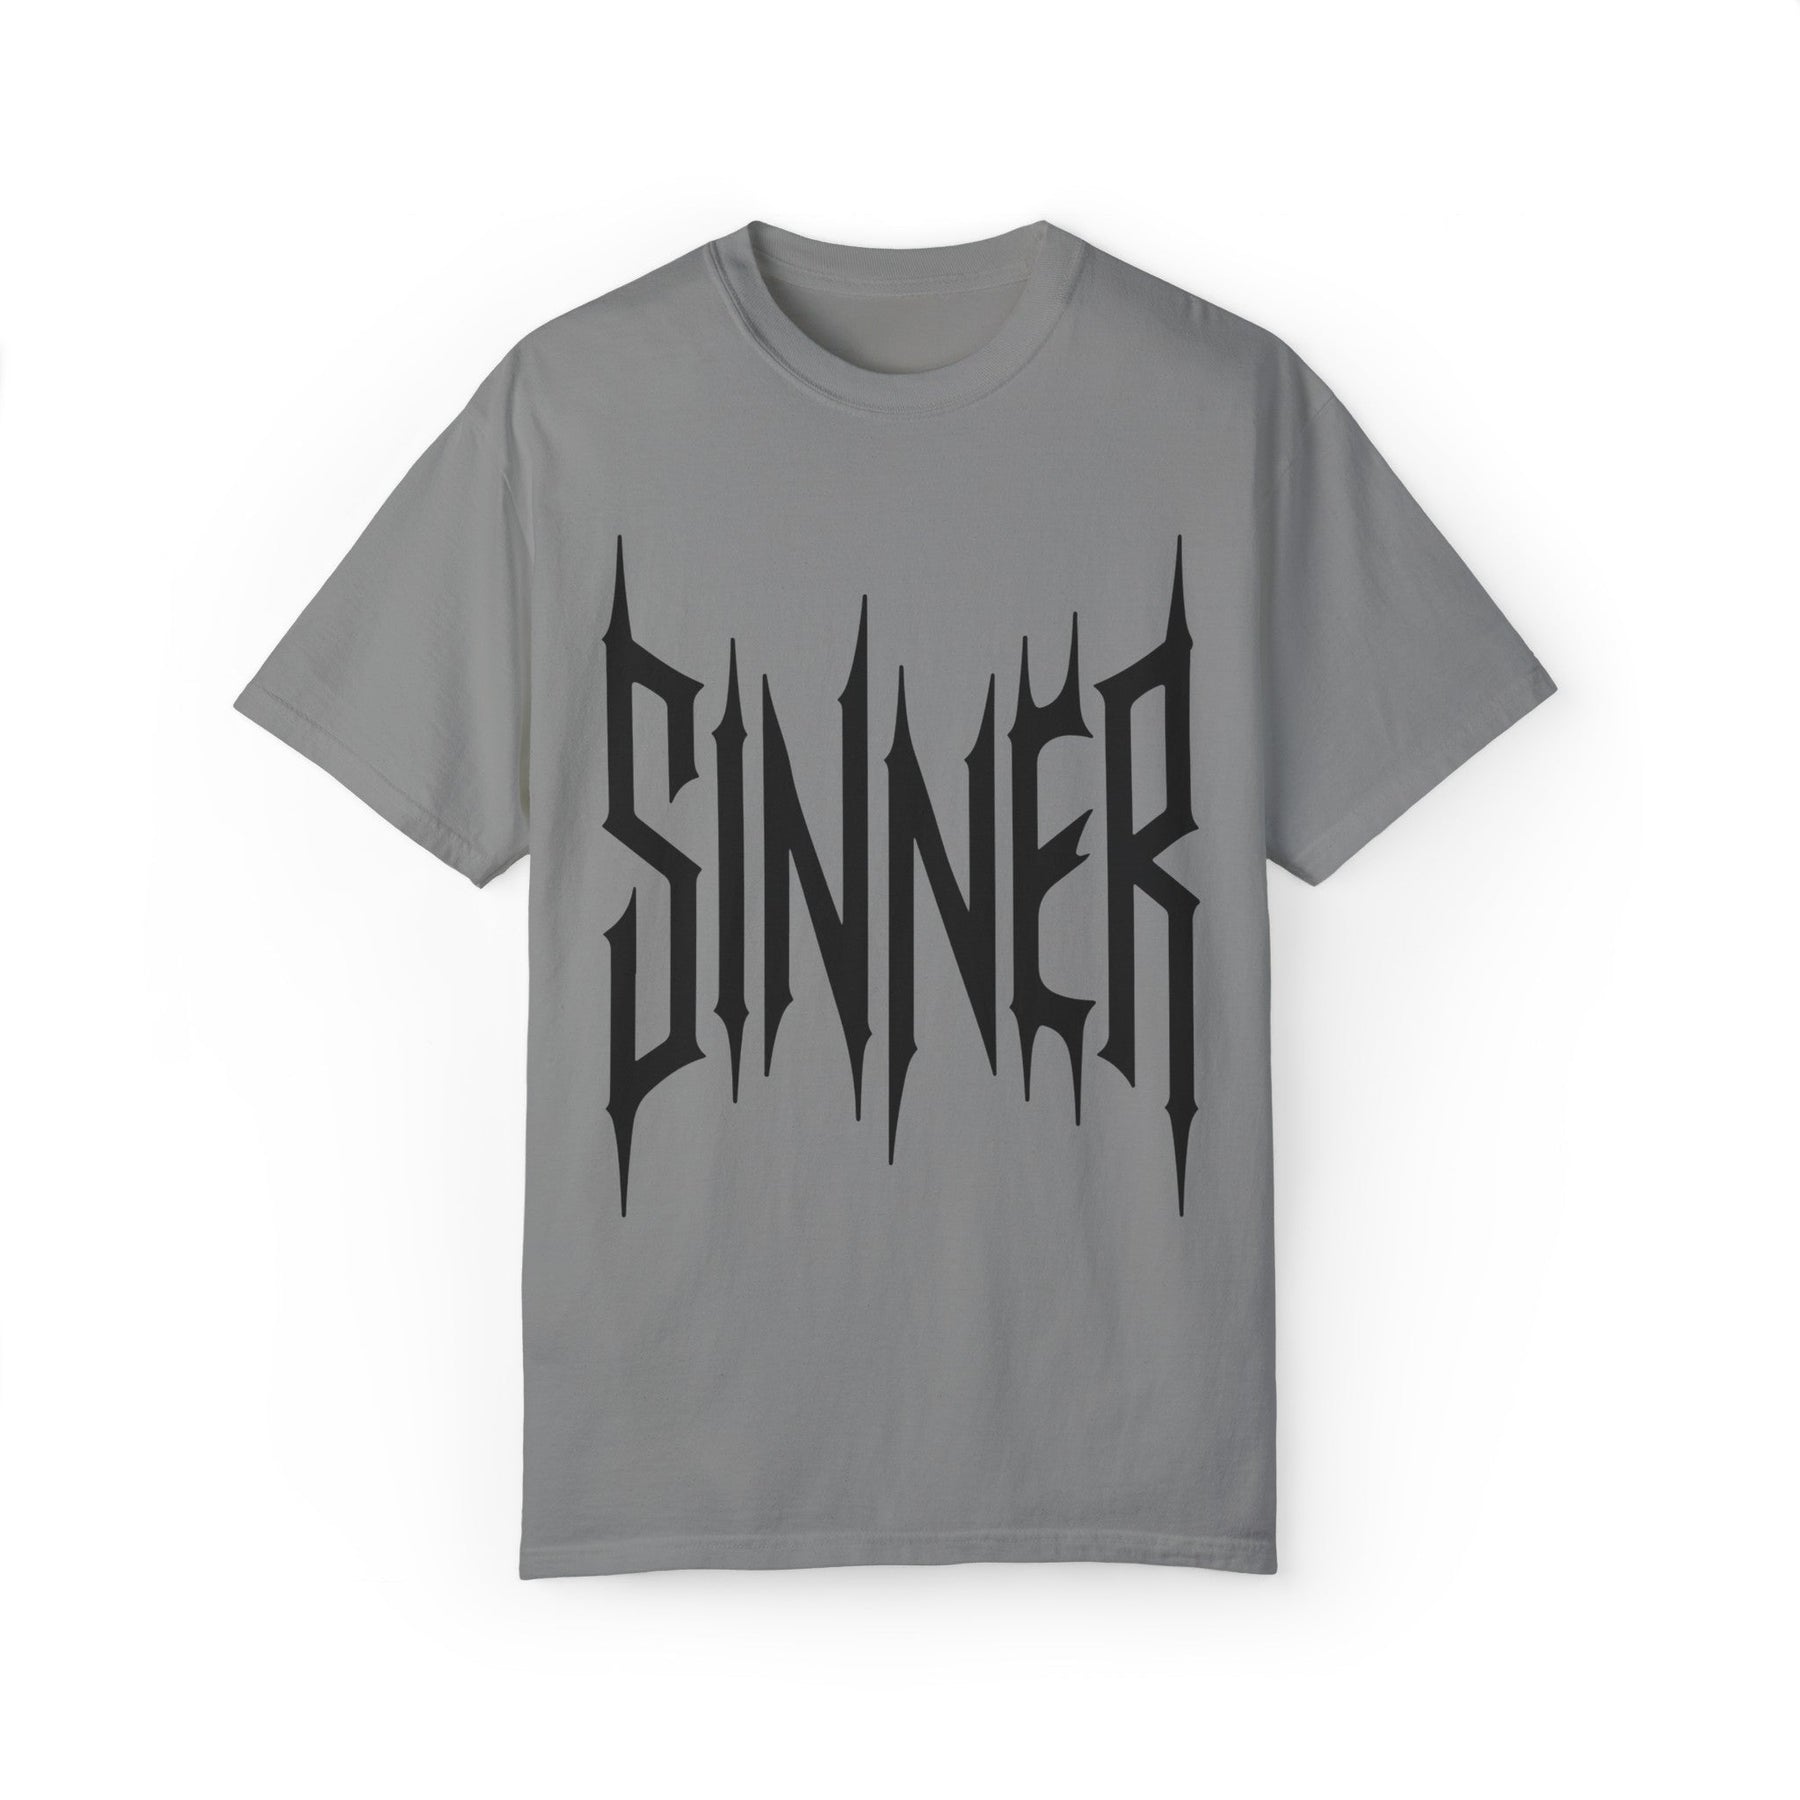 Sinner Oversized Beefy Tee - Goth Cloth Co.T - Shirt22050147108112330512